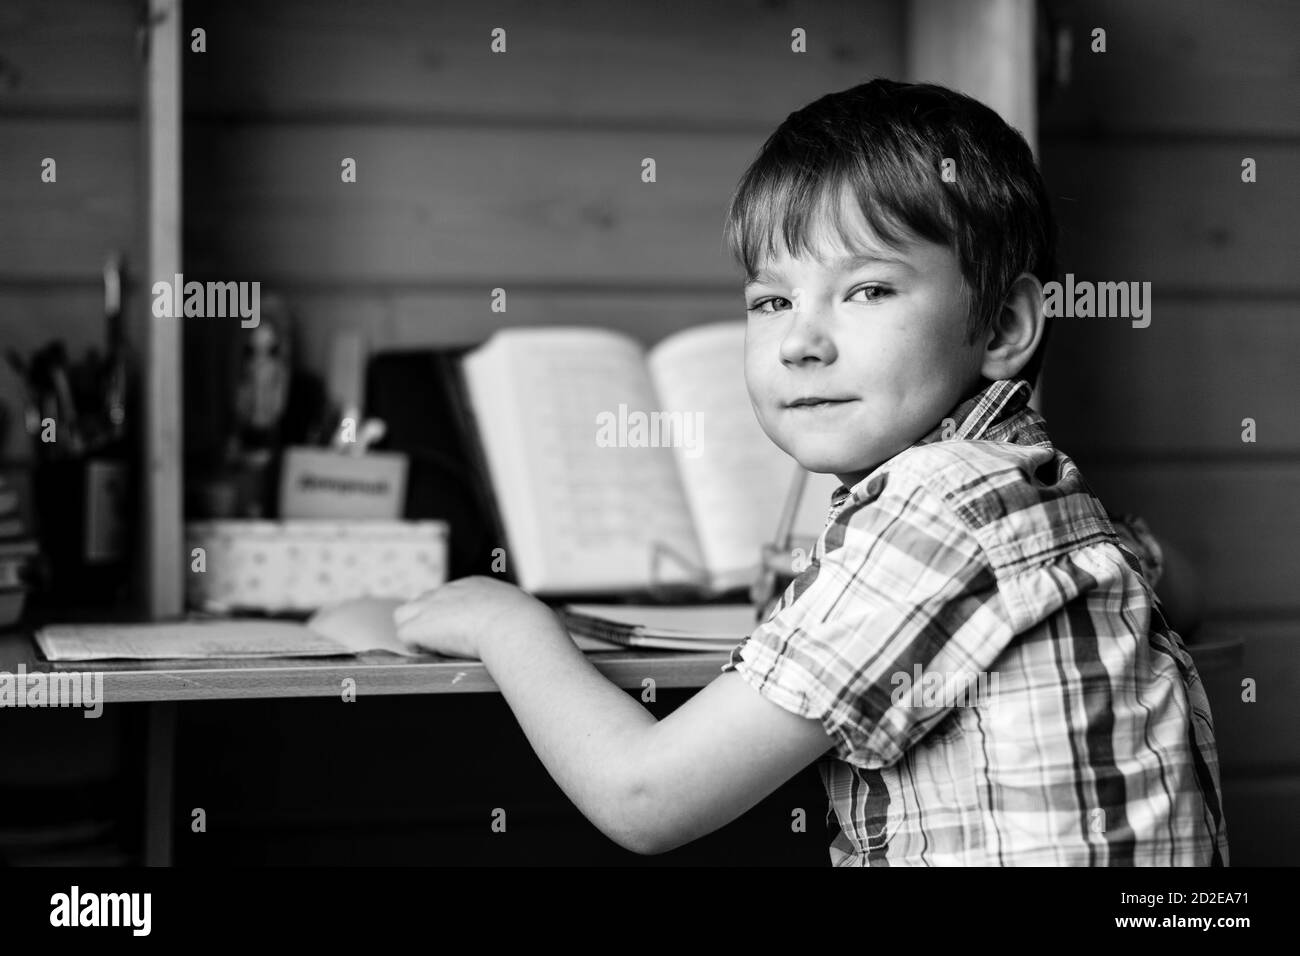 School student doing homework. Black and white photography. Stock Photo